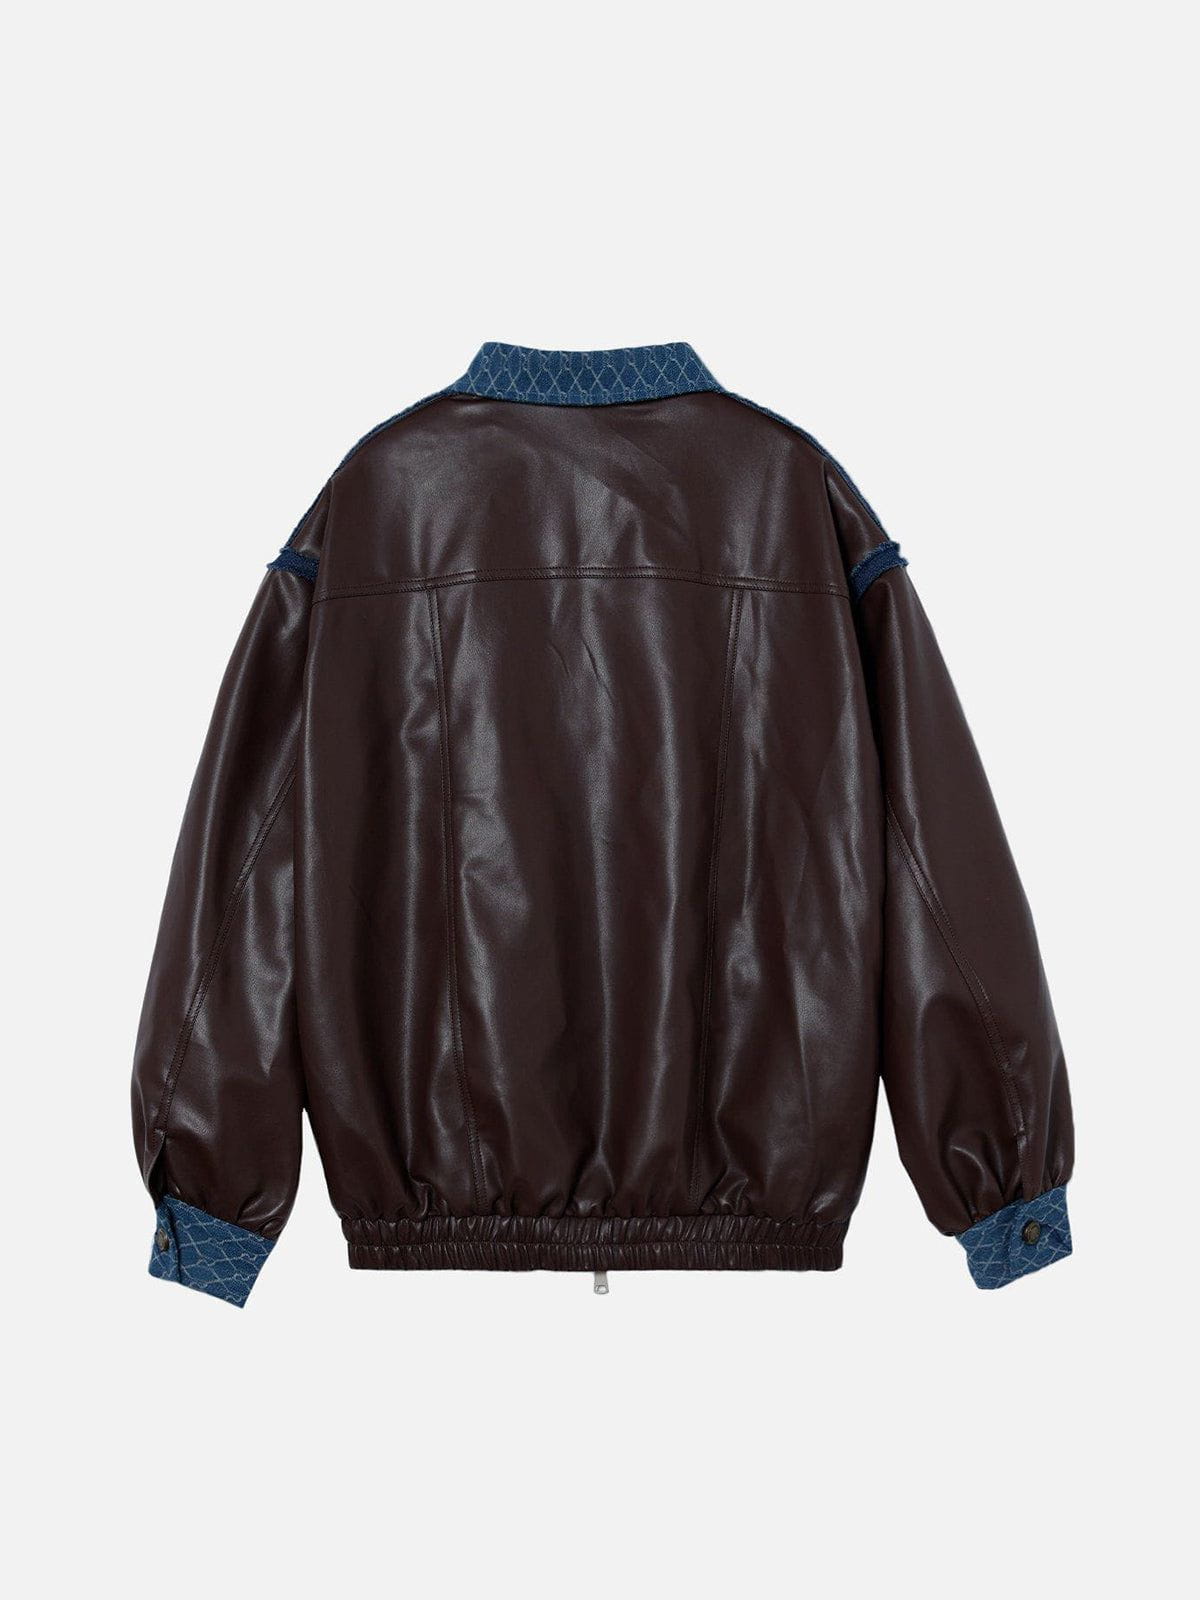 Aelfric Eden Denim Patchwork Jacquard Leather Jacket